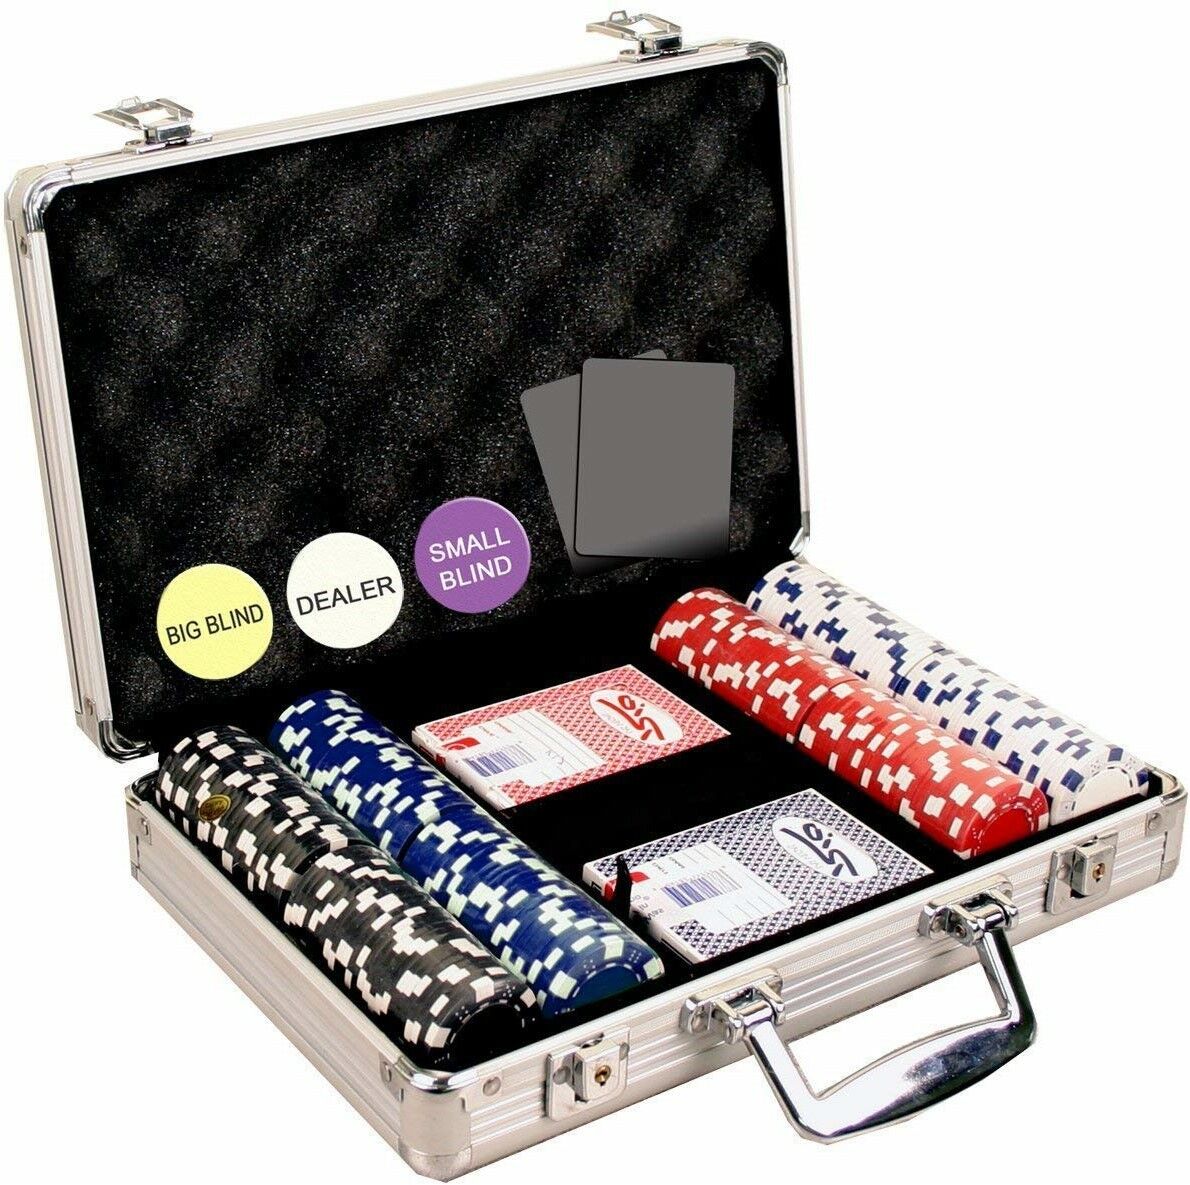 DA VINCI 200 Dice Stripe Poker Chip Set